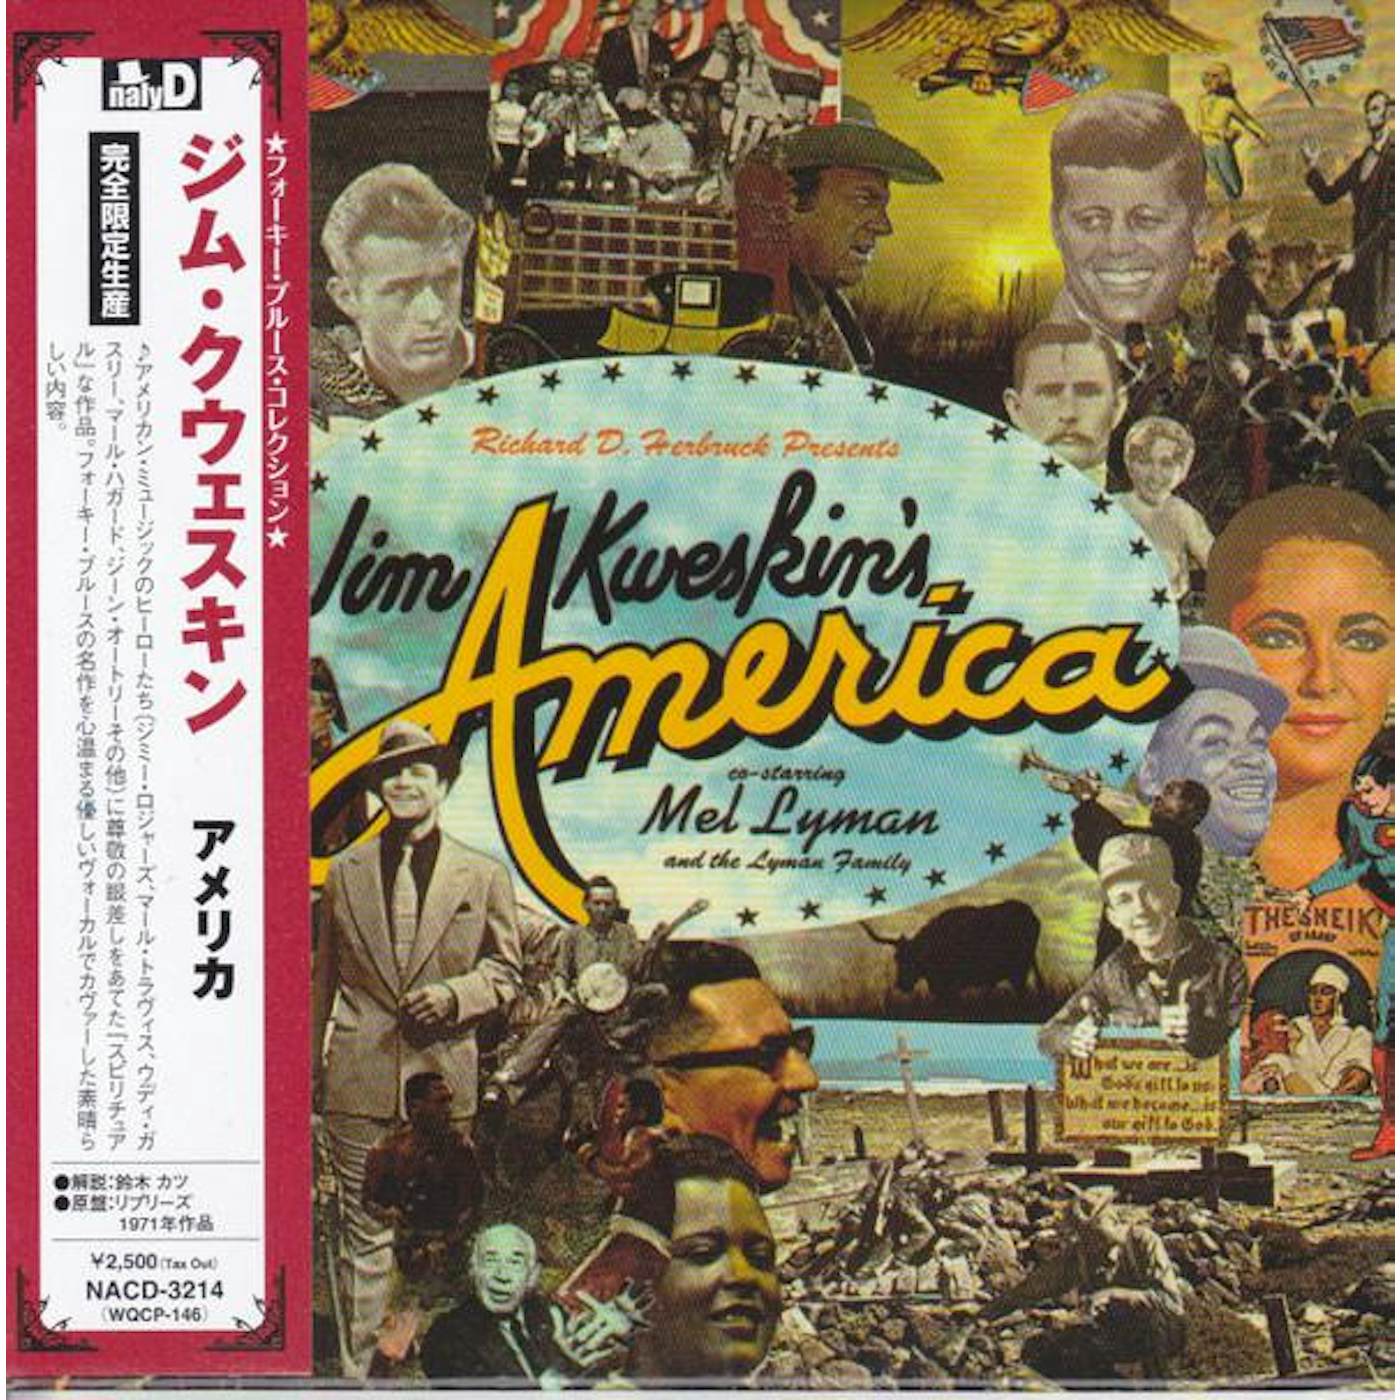 Jim Kweskin AMERICA CD